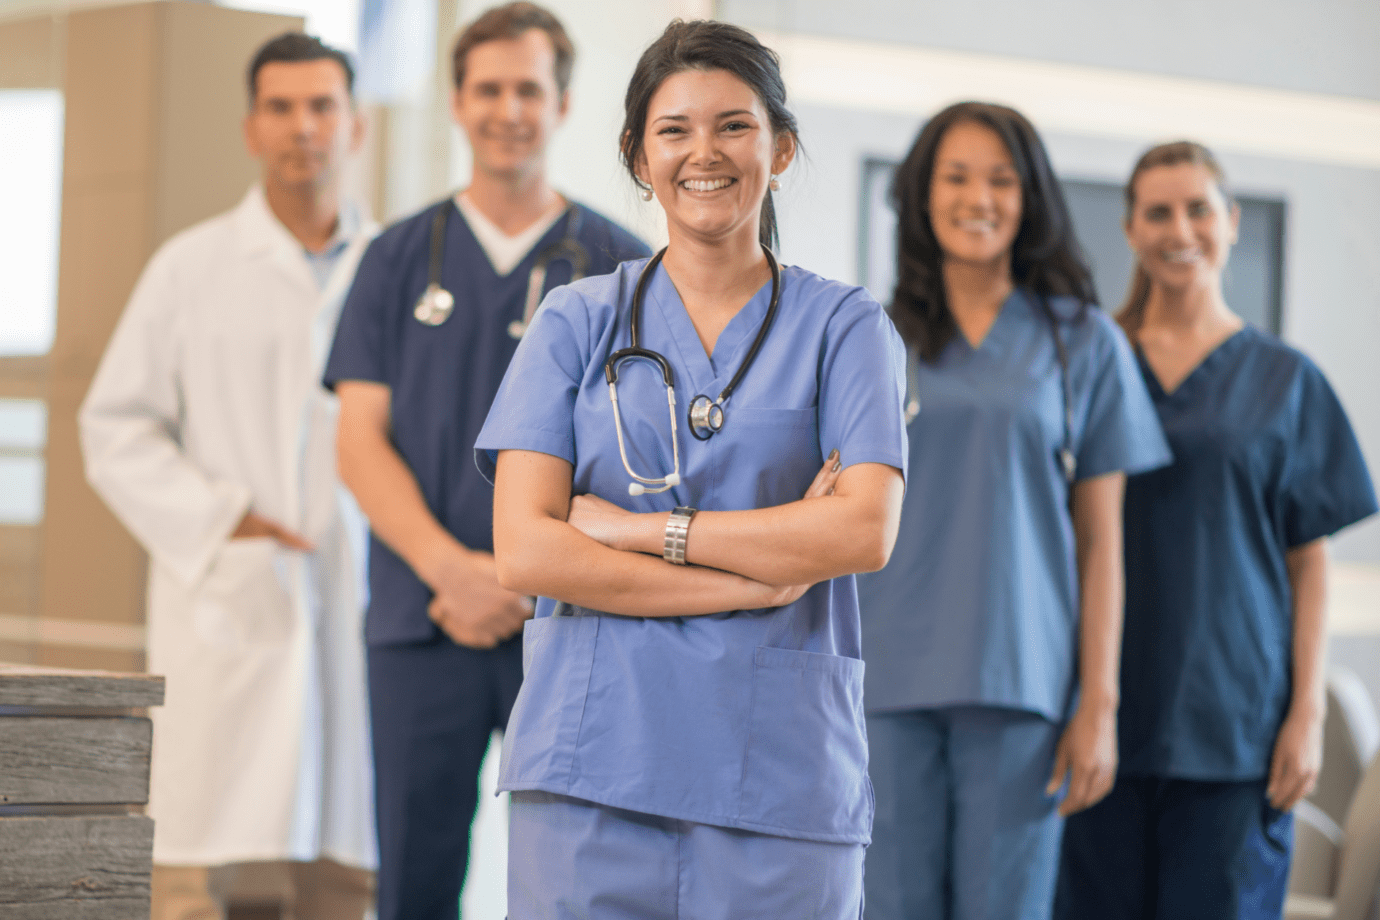 Benefits of Nursing Certifications